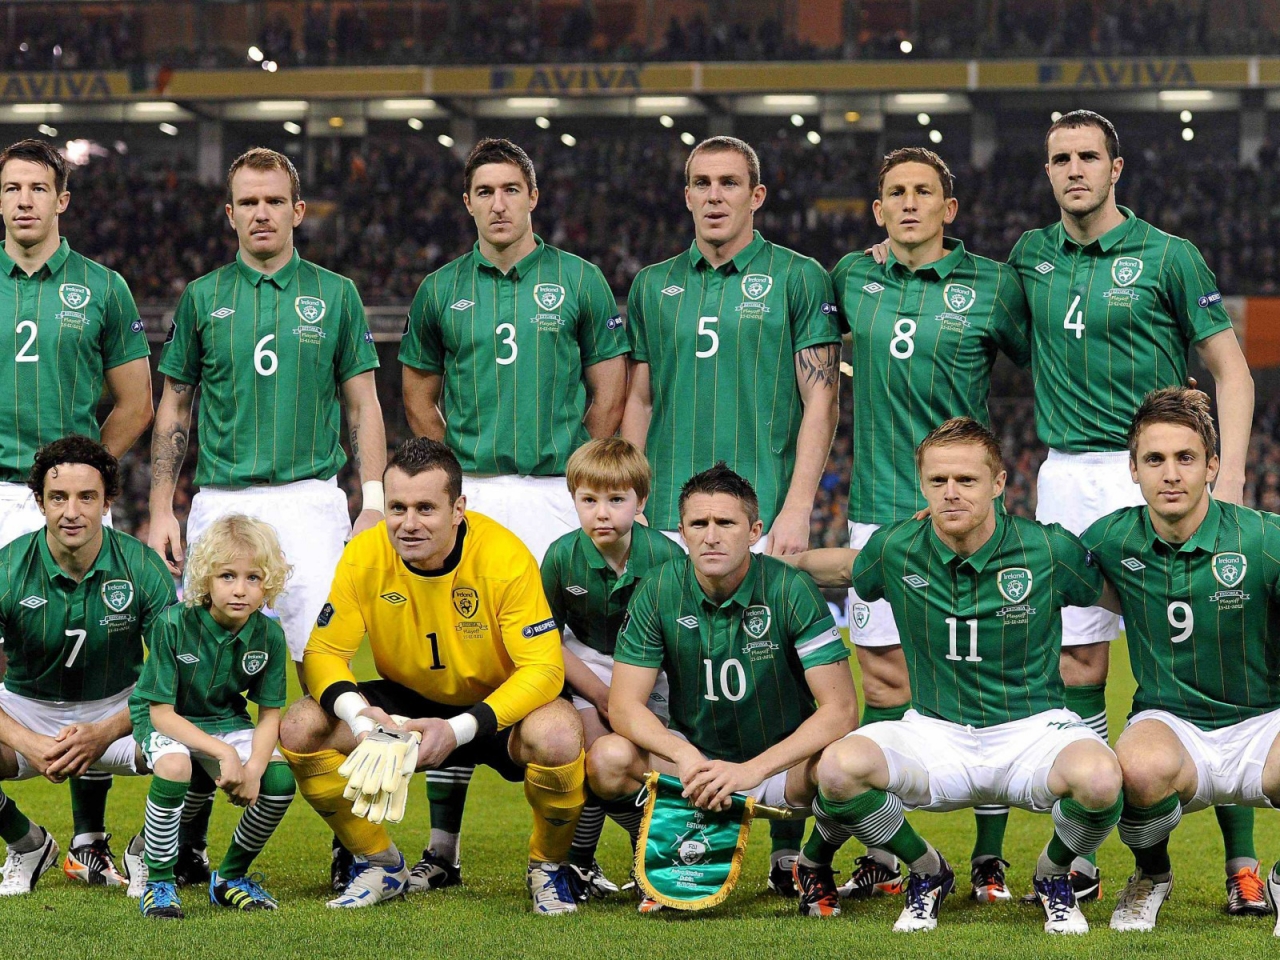 Ireland National Team for 1280 x 960 resolution